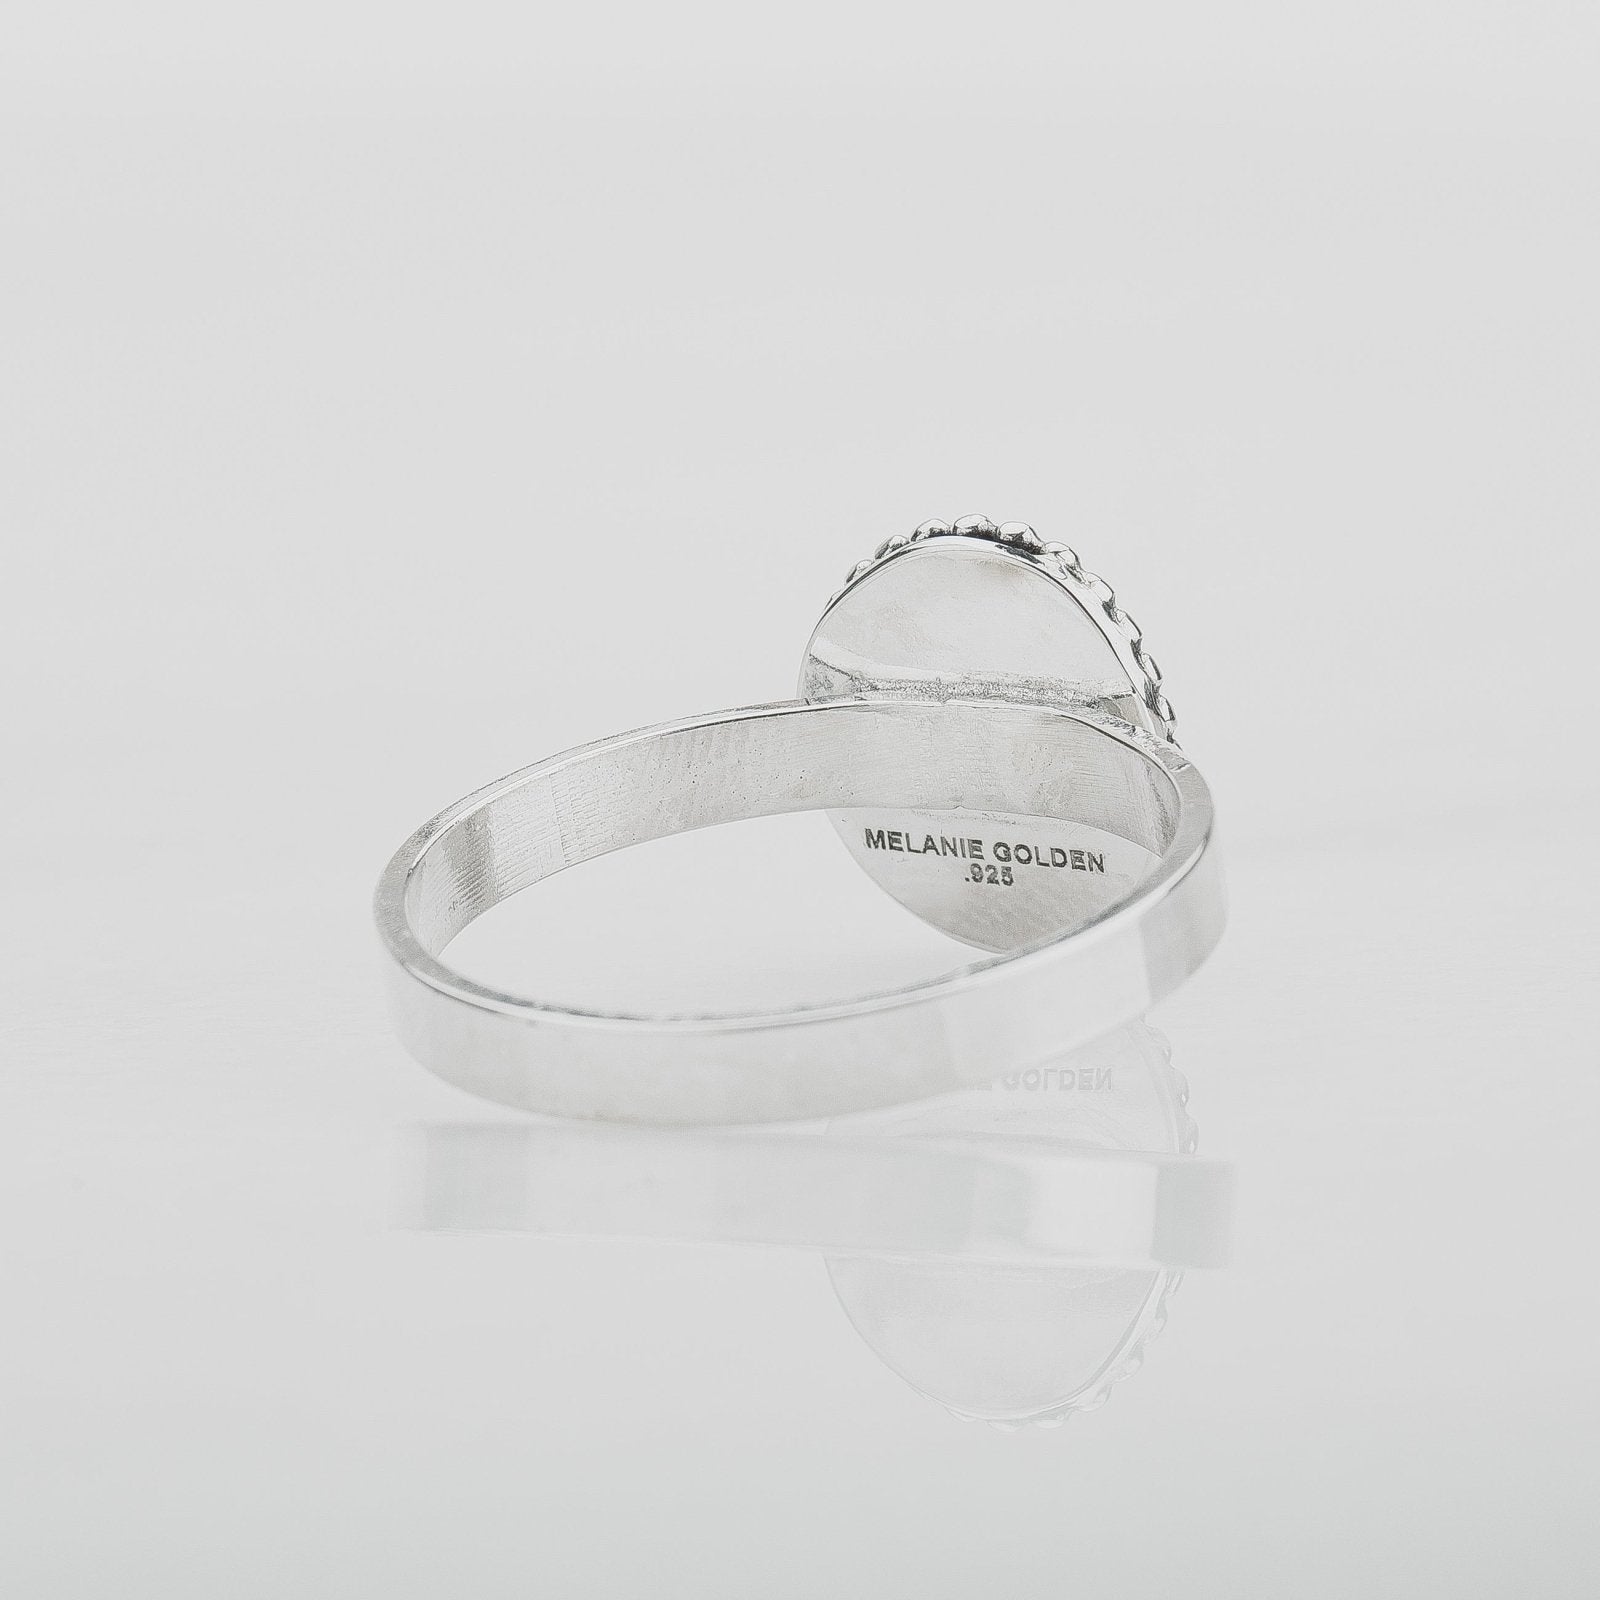 Size 10.25 Opal Ring - Melanie Golden Jewelry - gemstone rings, rings